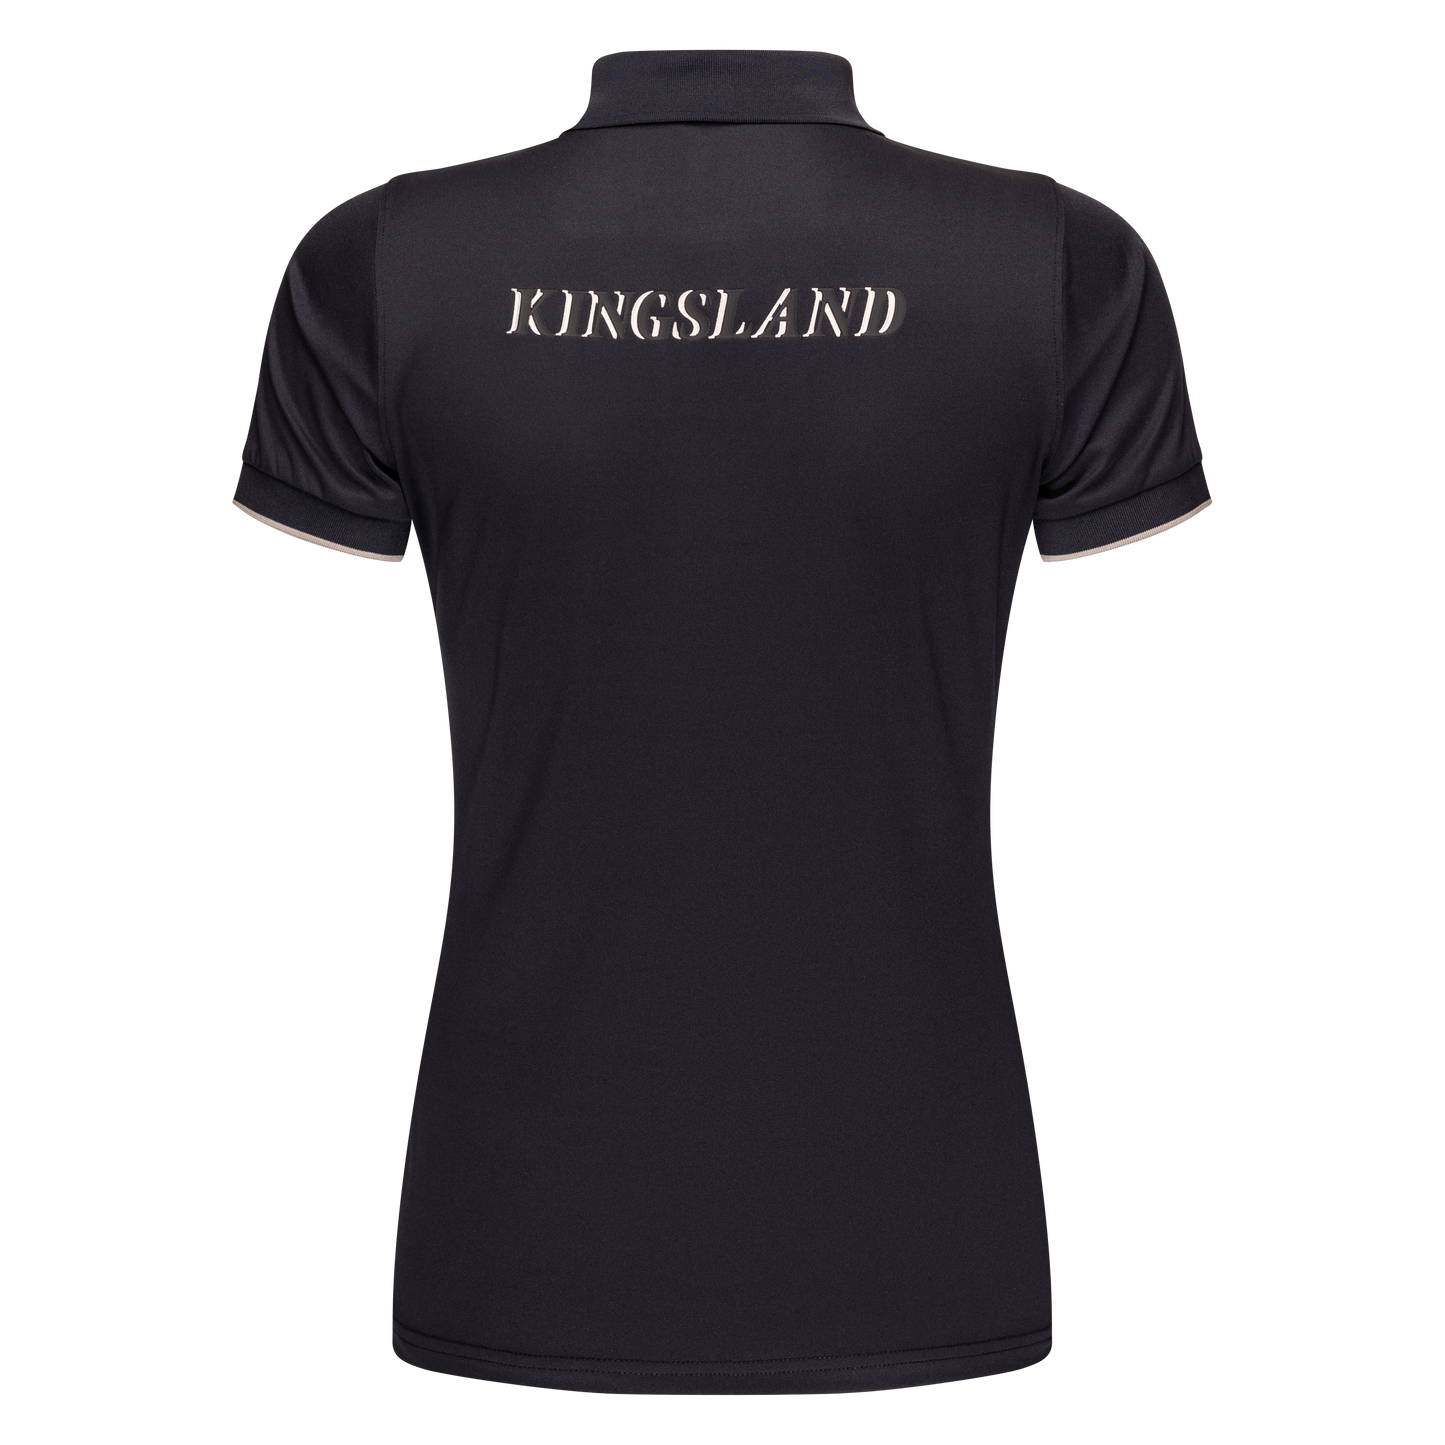 Kingsland Equestrian Riding Cadence Ladies Tec Pique Polo Shirt navy